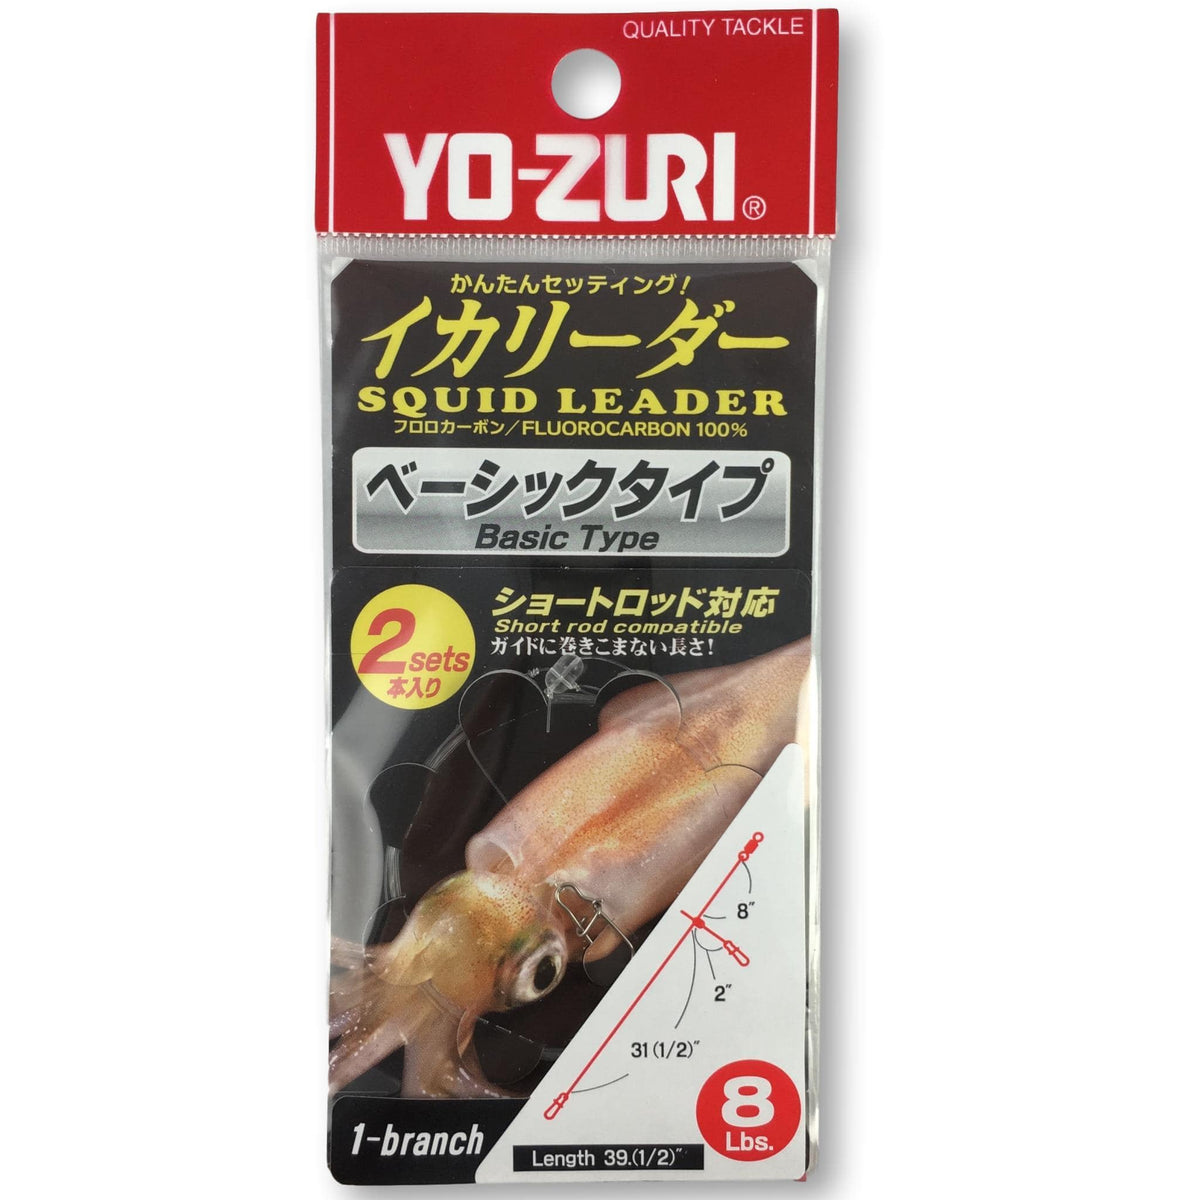 Yo-Zuri Squid Leaders 8 lbs - 2 branches - 1 set